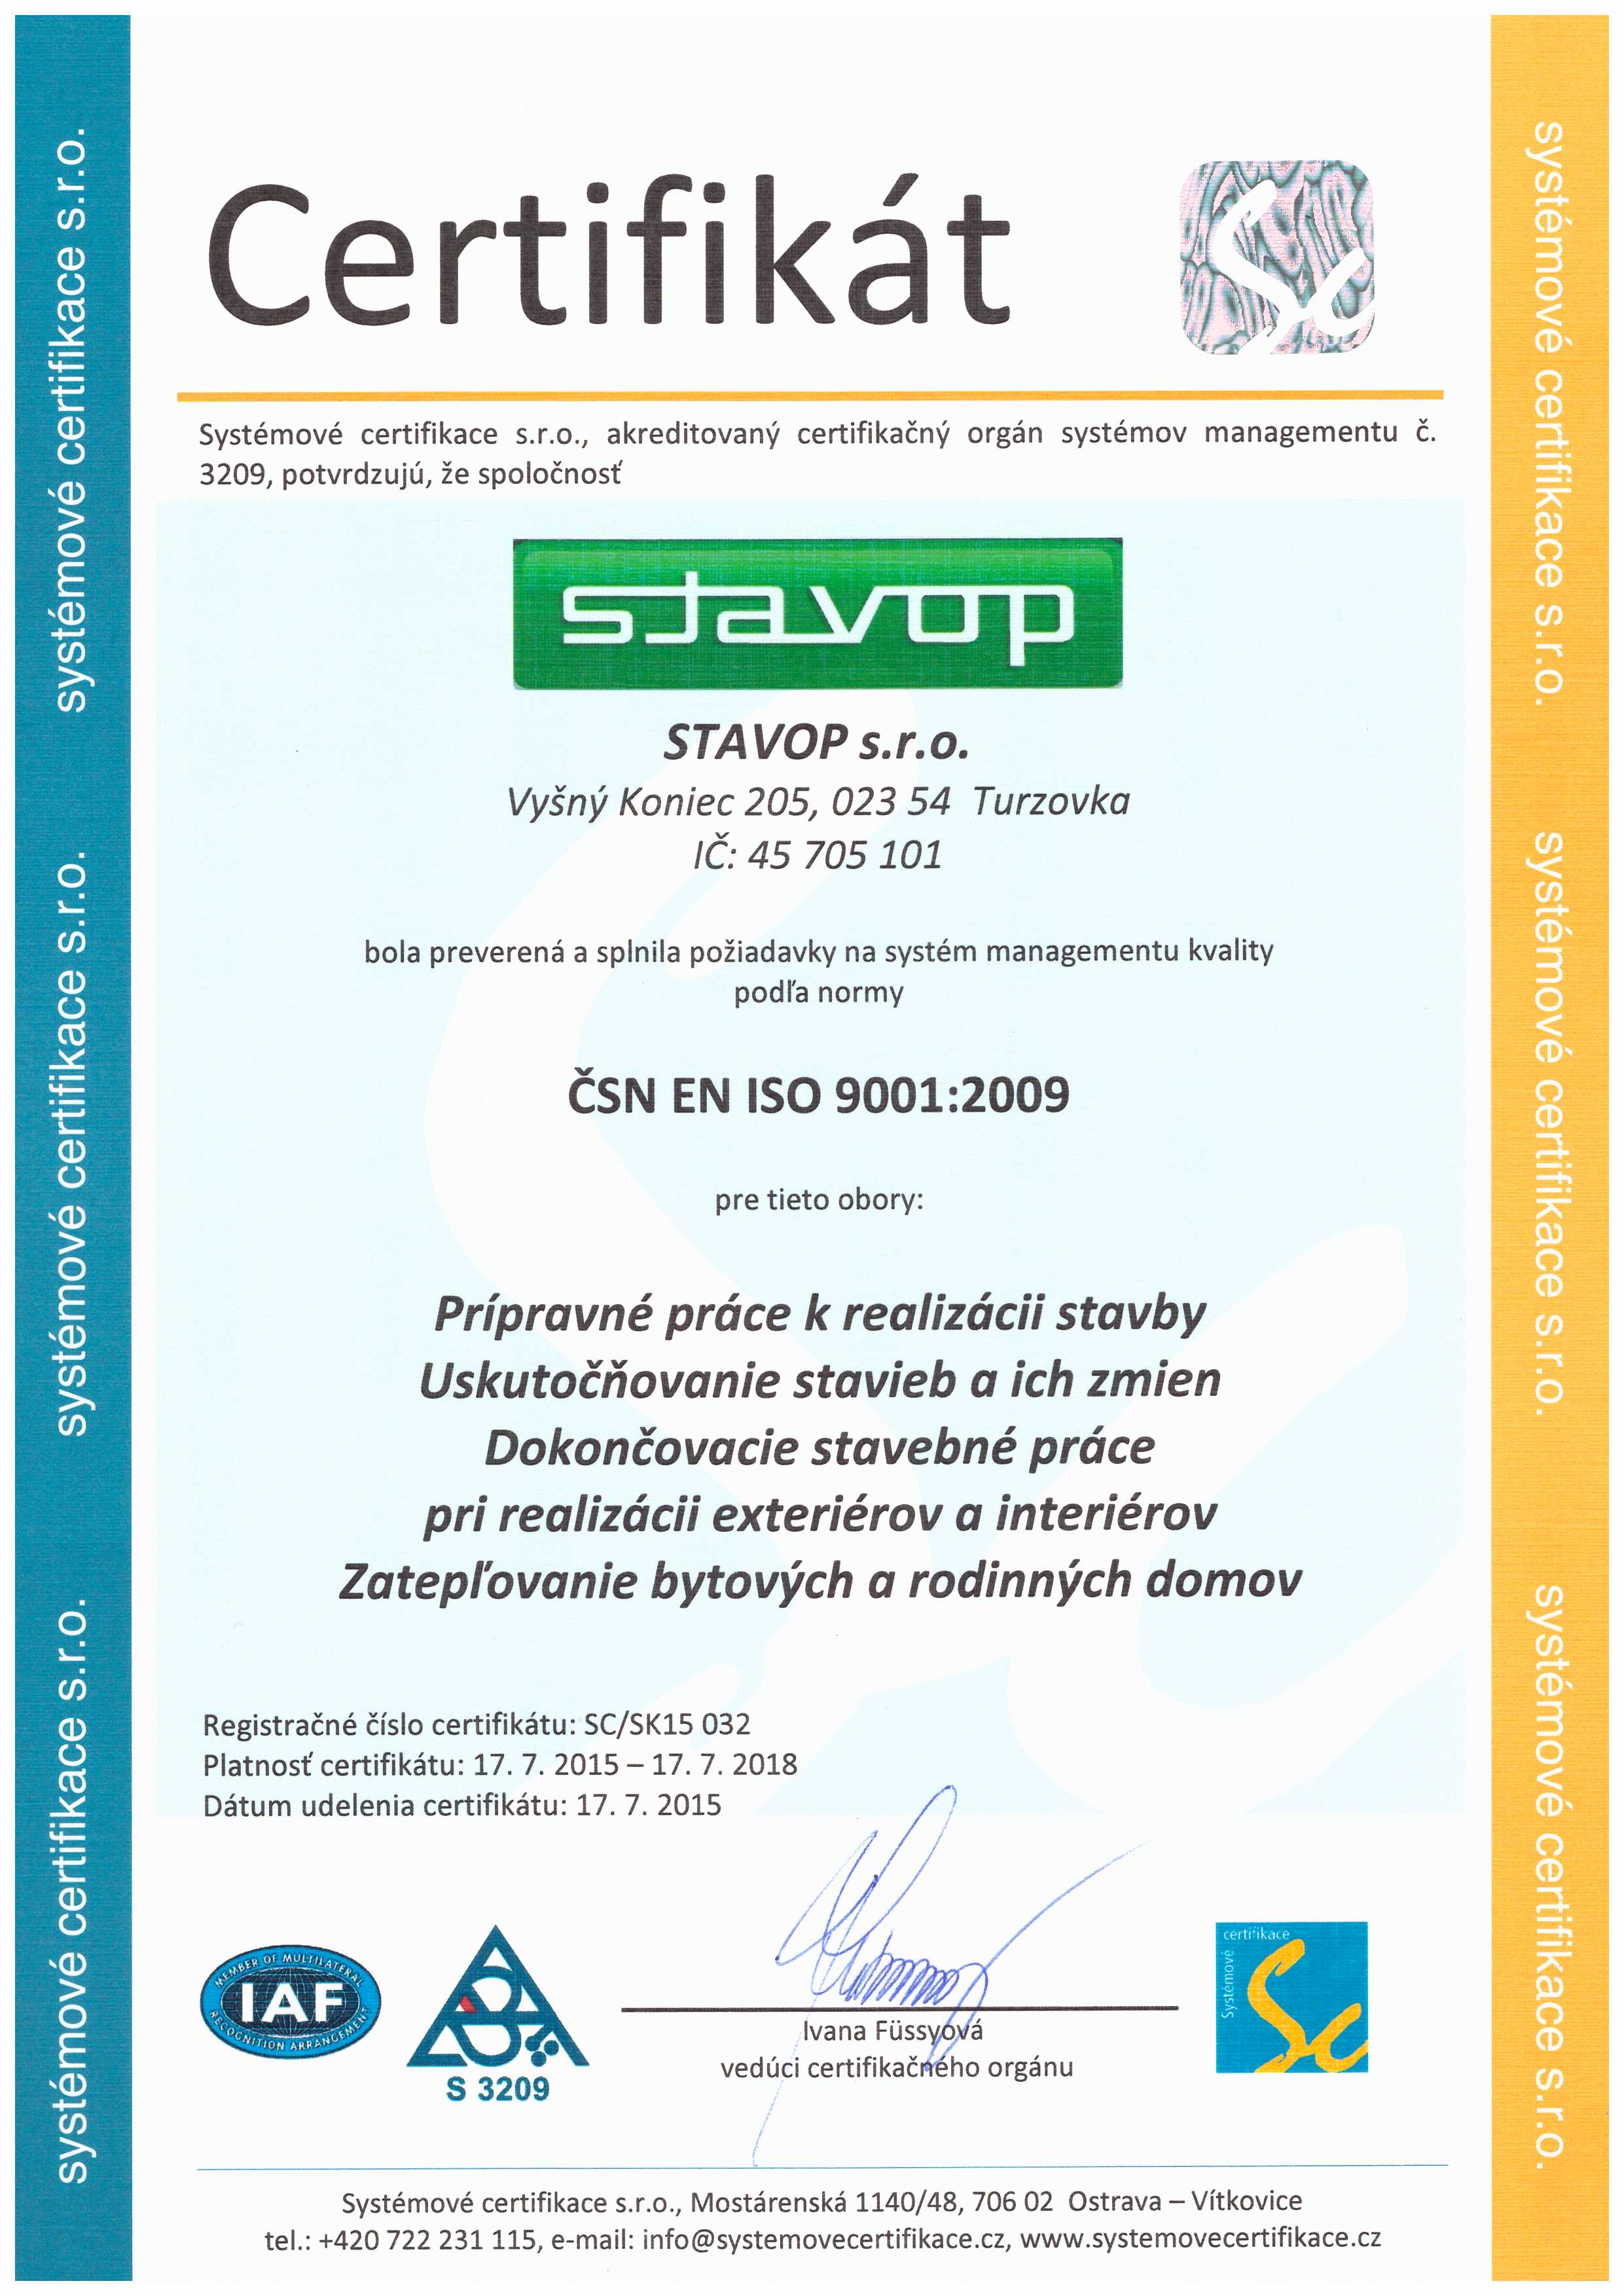 Certifikat-iso-9001-sk